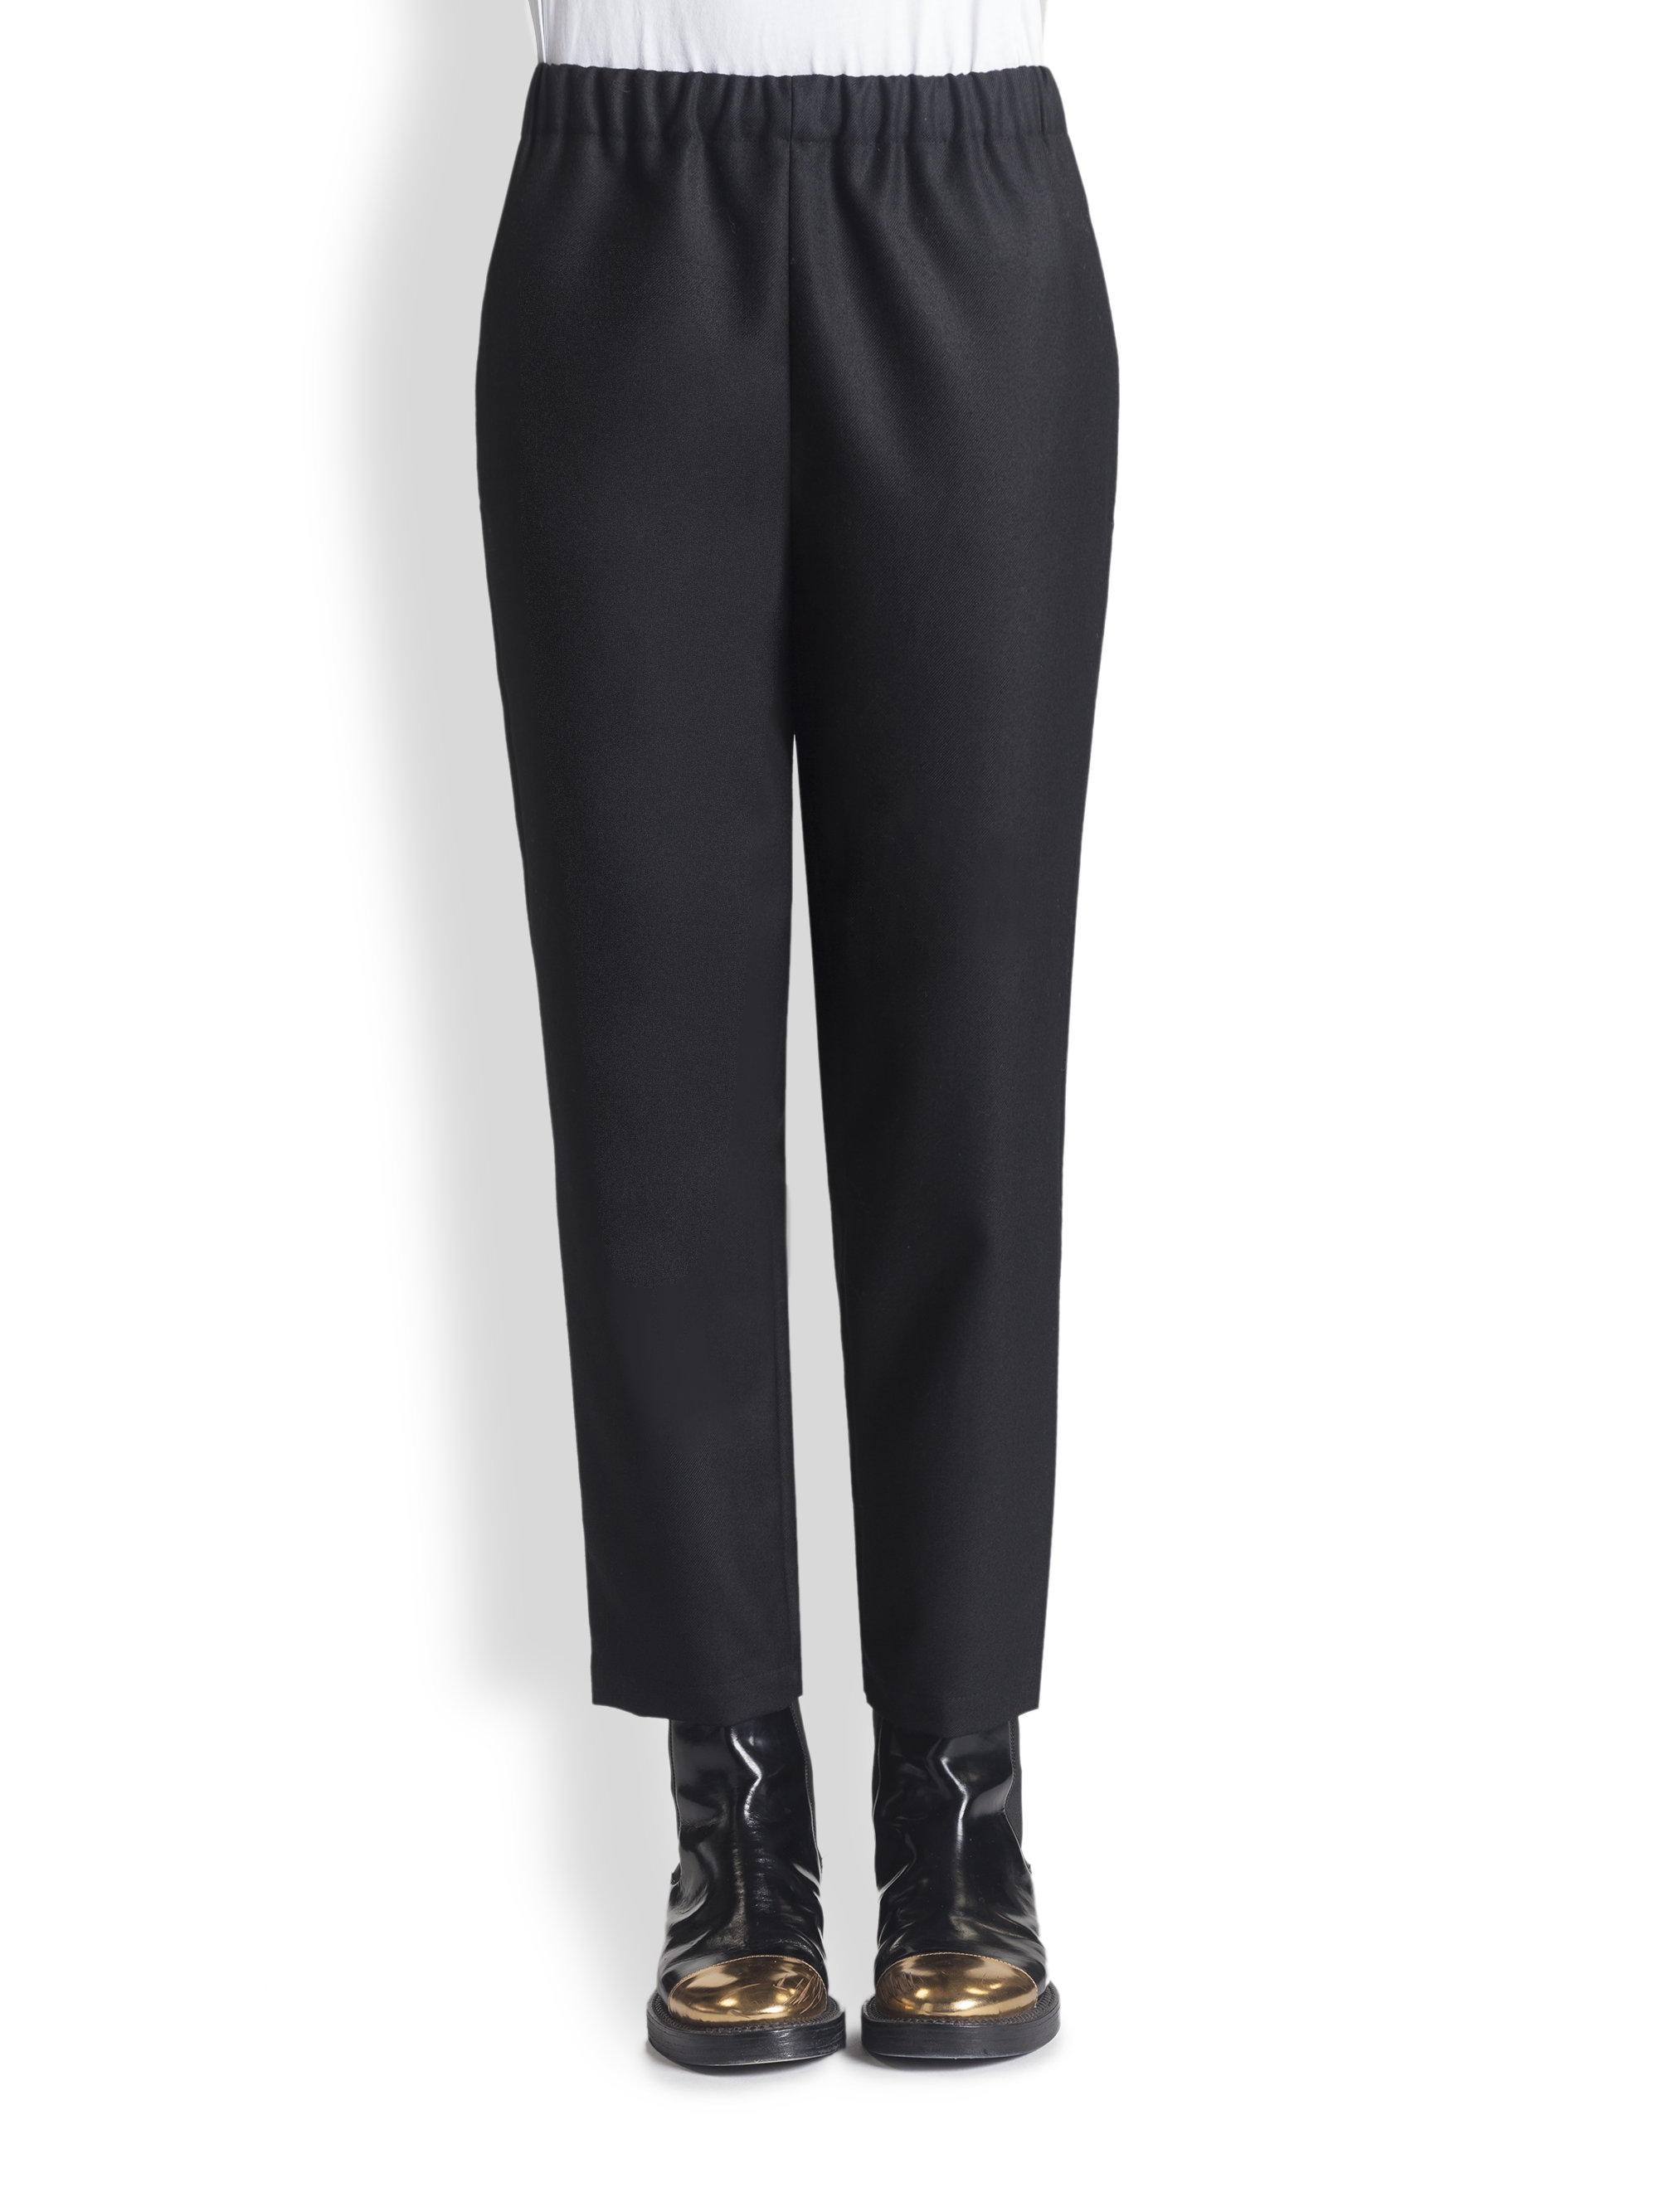 Marni Elastic-Waist Wool Pants in Black | Lyst